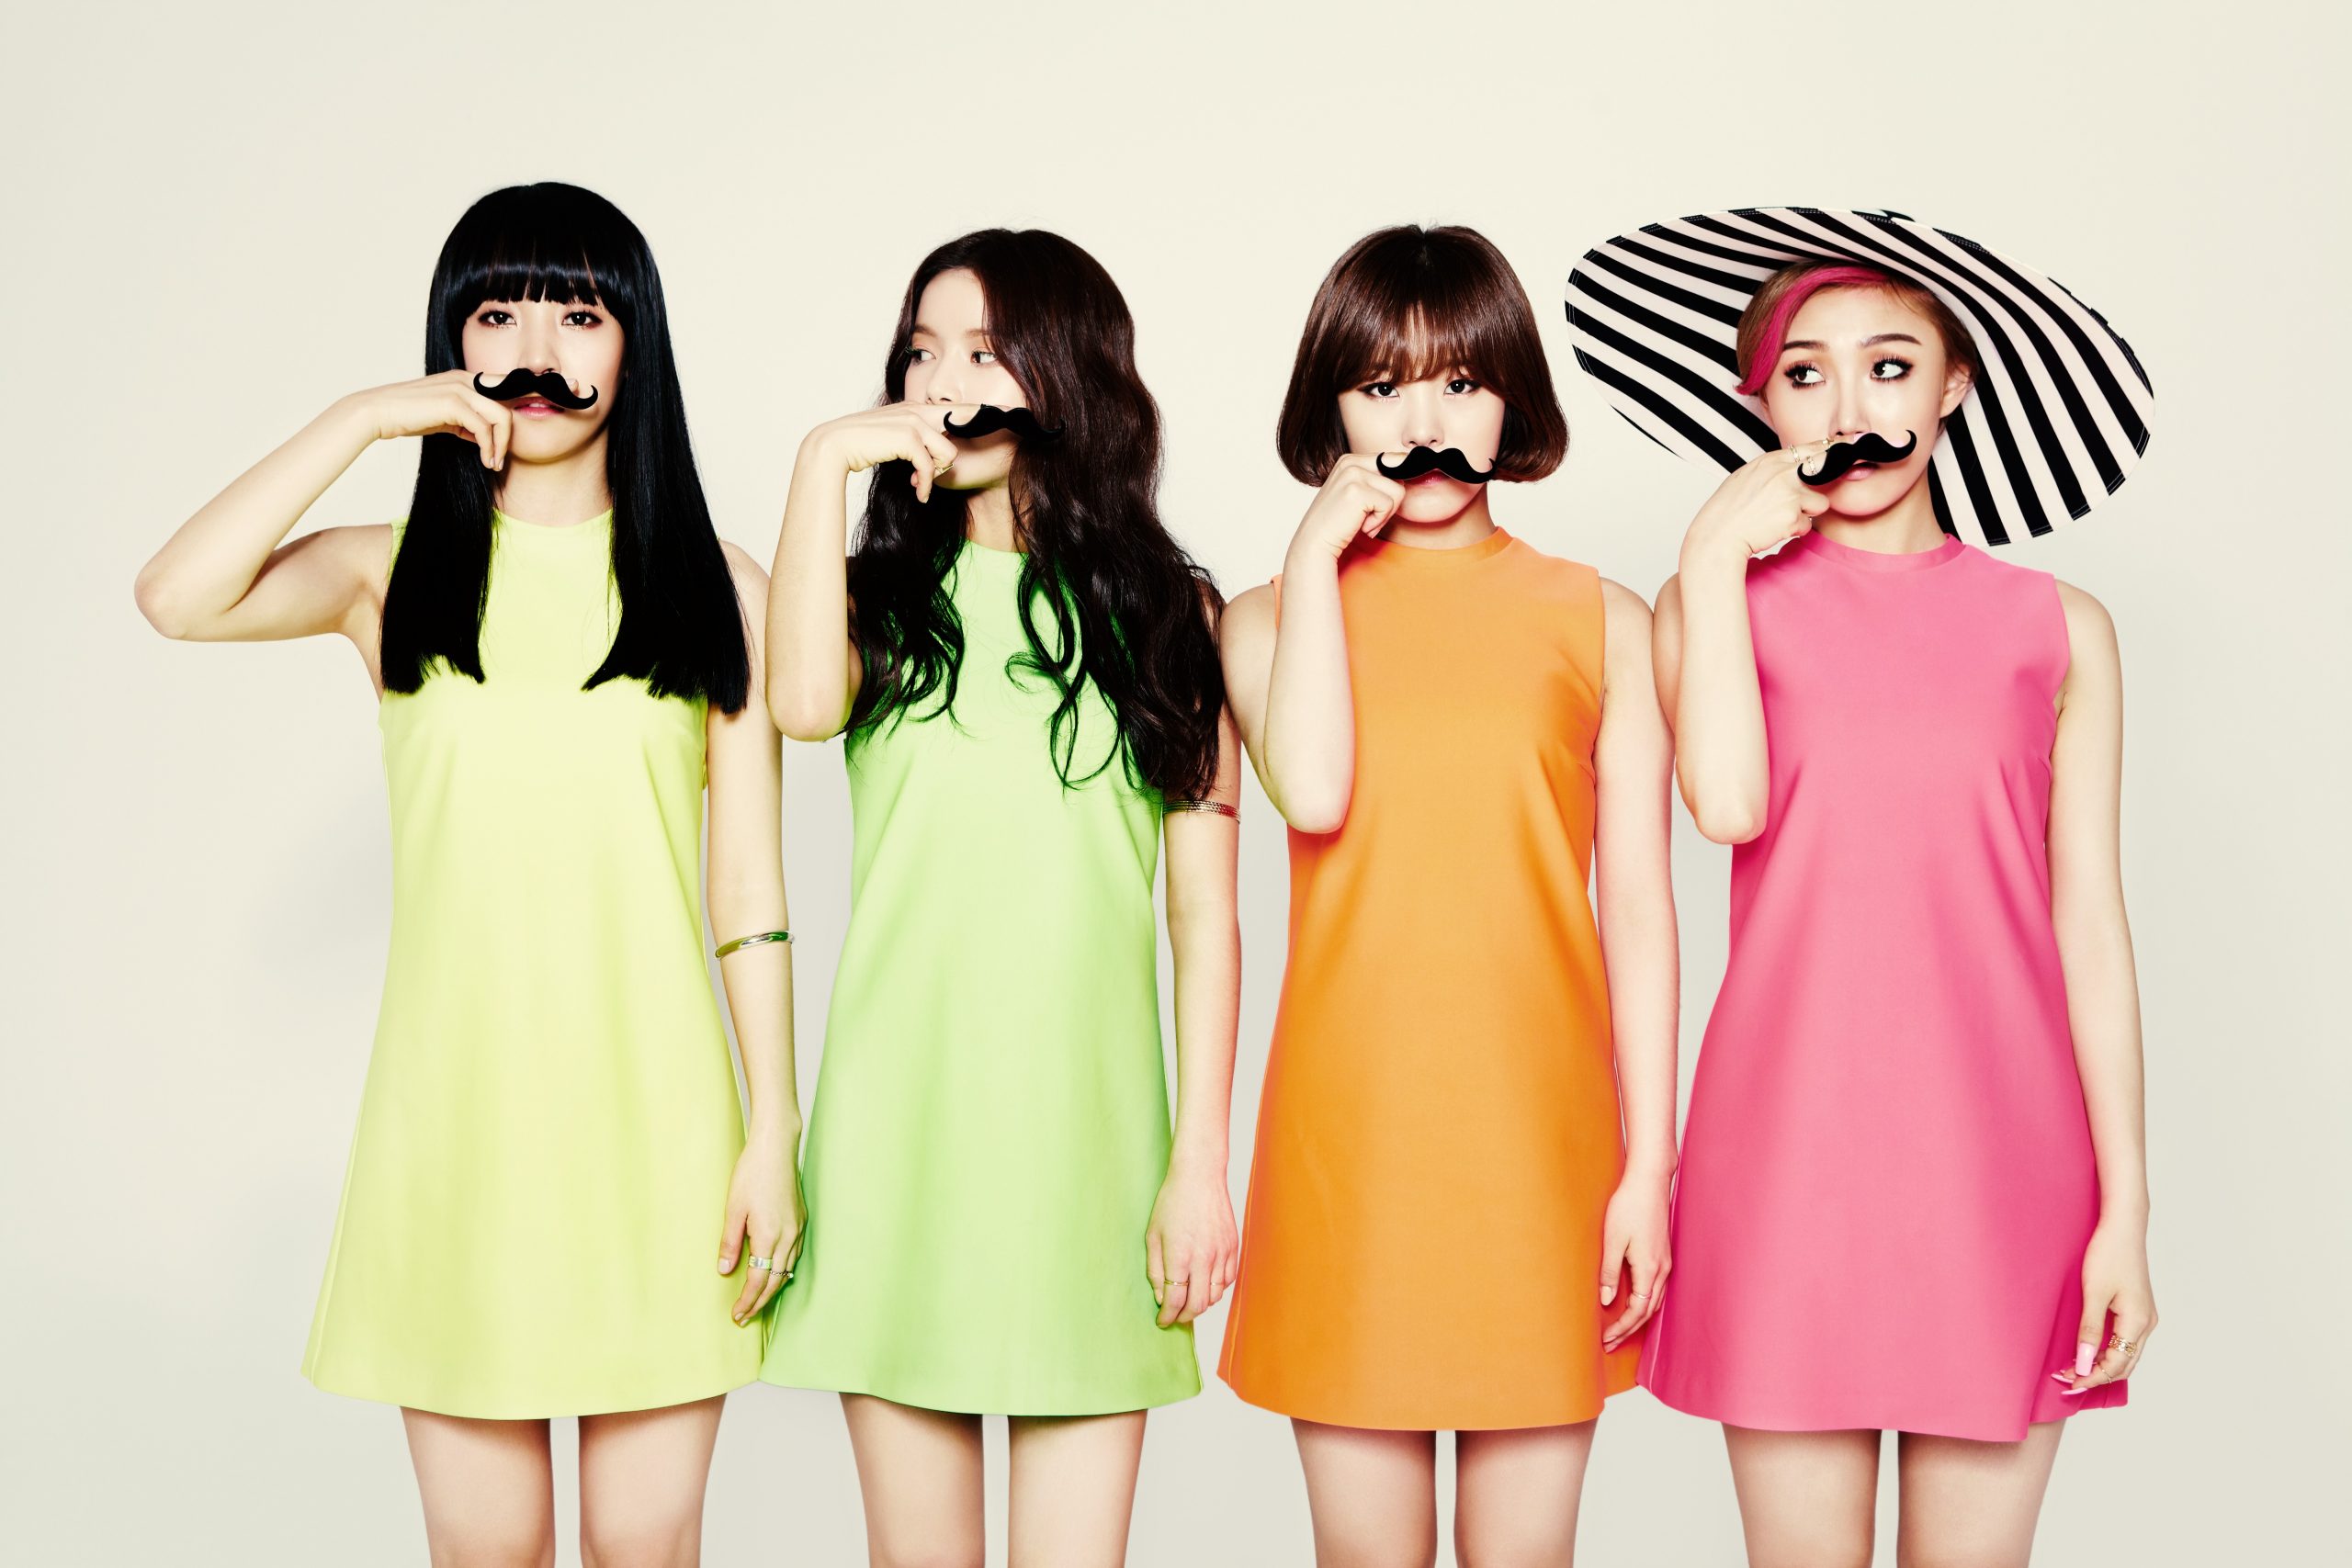 Mamamoo K-pop groups